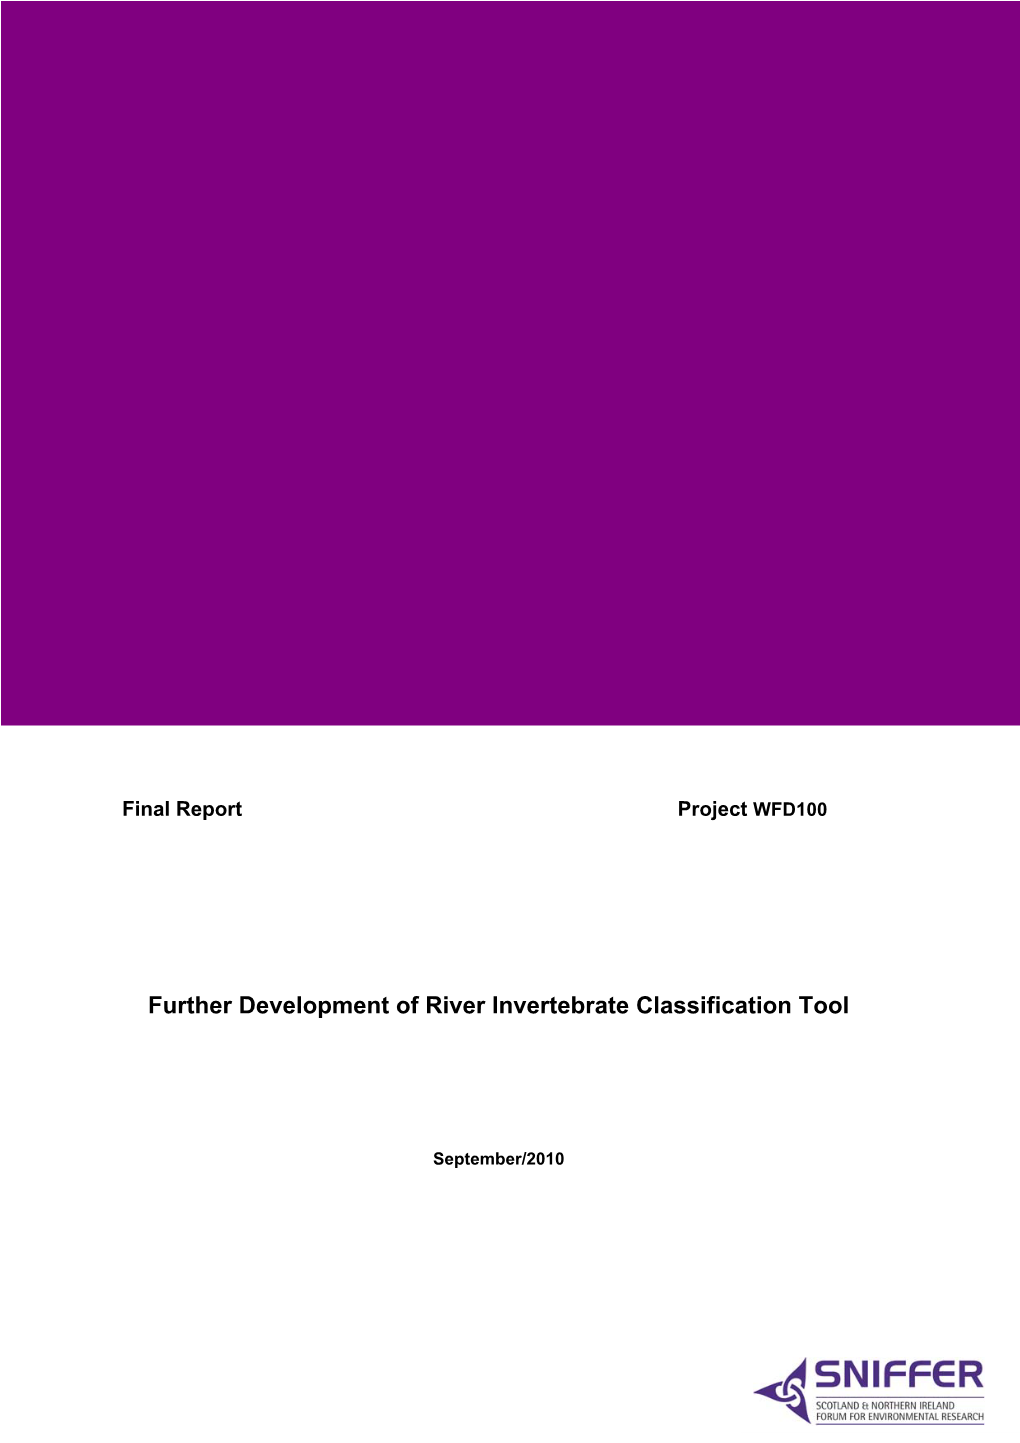 Further Development of River Invertebrate Classification Tool